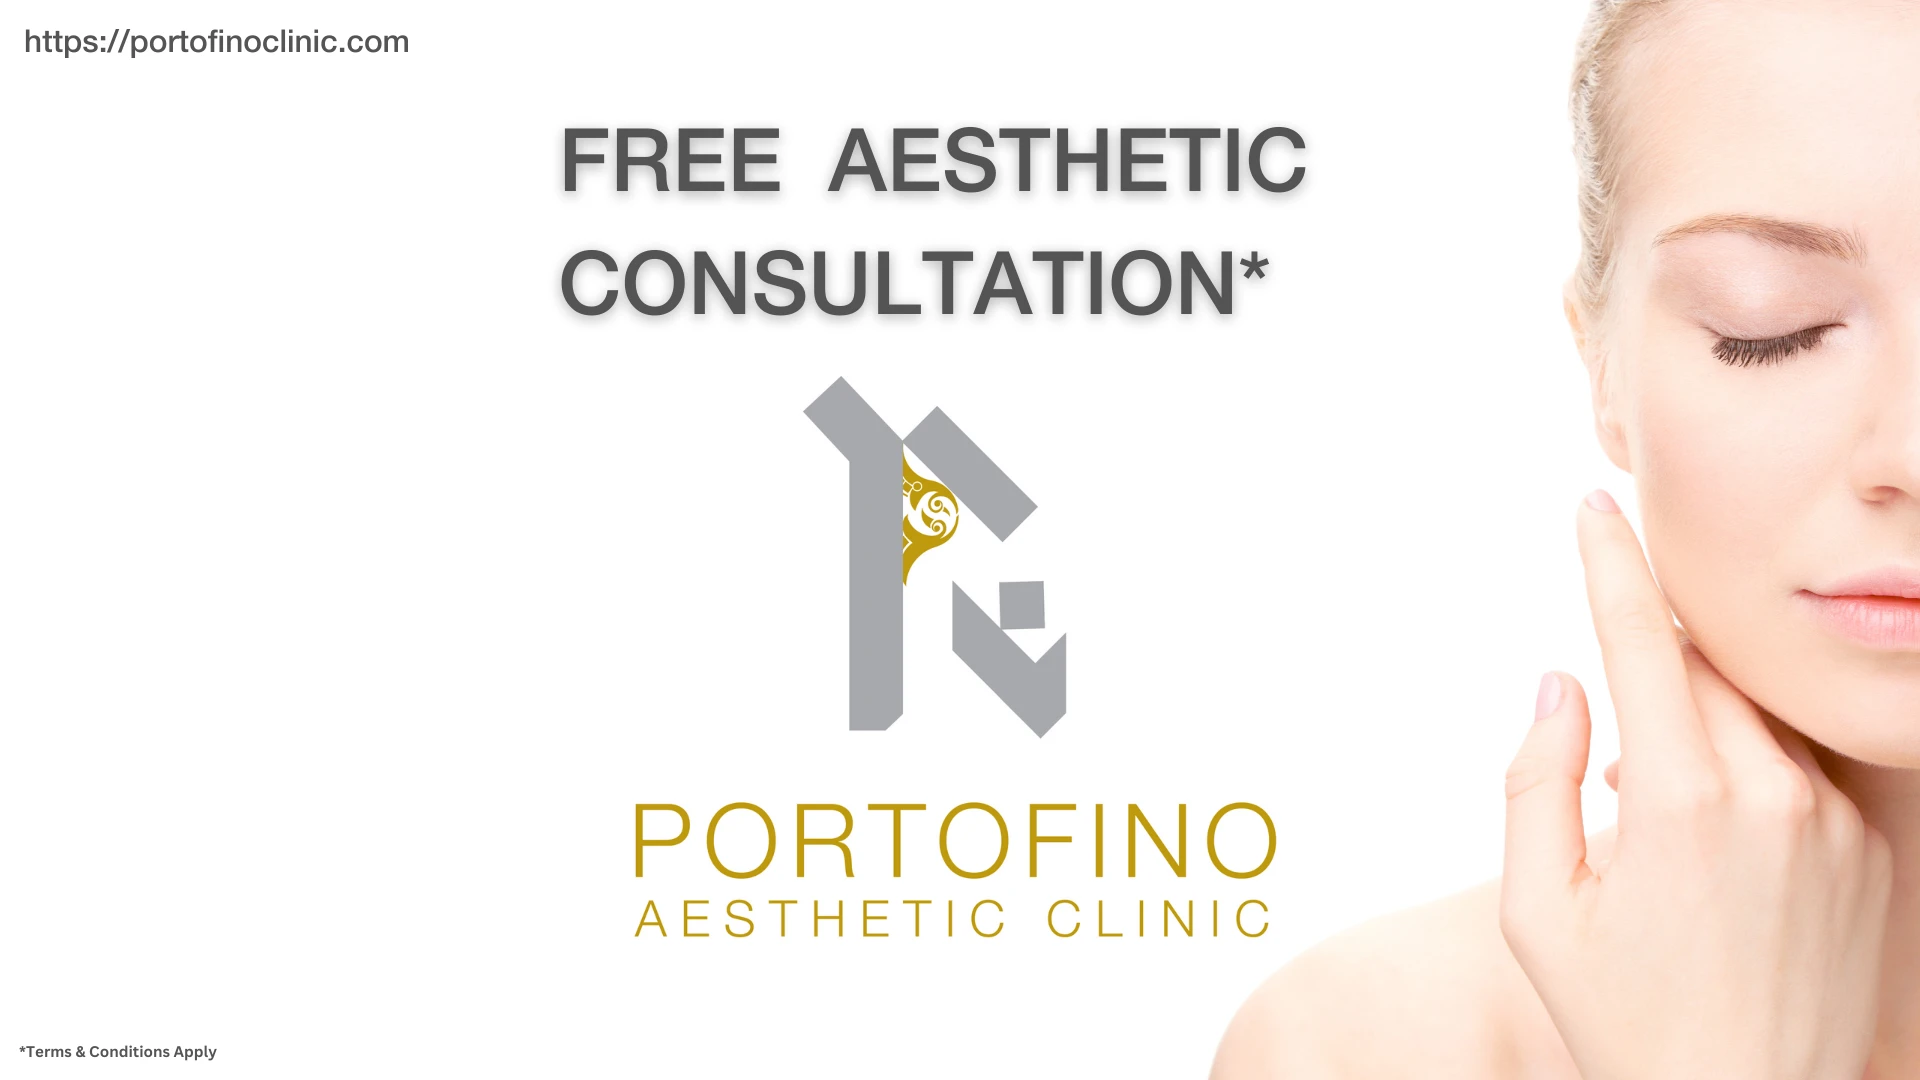 Free Aesthetic Consultation at Portofino Aesthetic Clinic